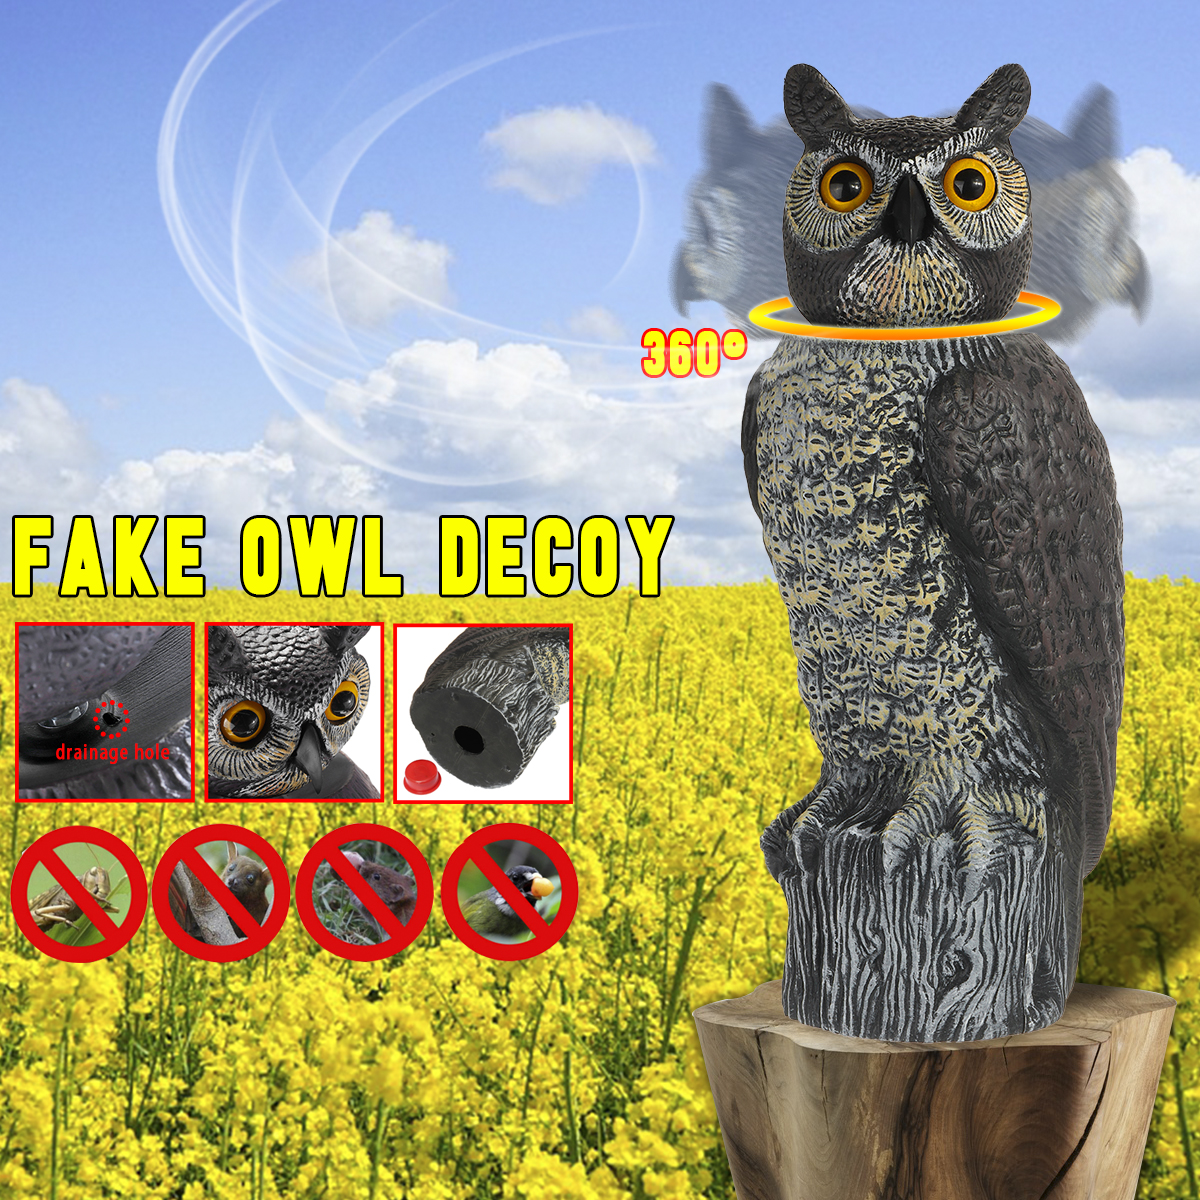 Rotating-Head-Owl-Decoy-Protection-Repellent-Bird-Pest-Control-Scarecrow-Garden-Yard-Decorations-1461479-1